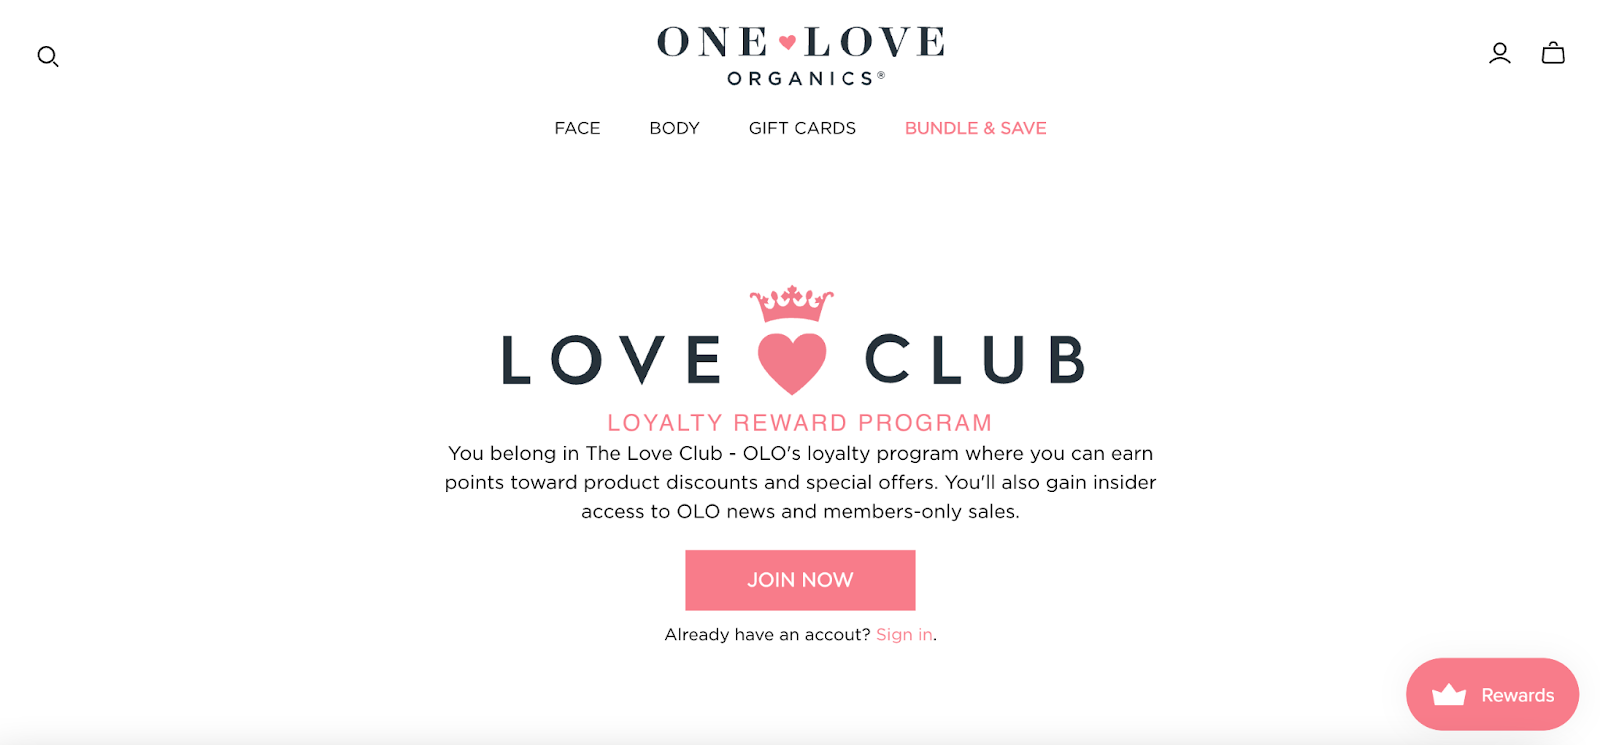 Creative rewards program names–A screenshot from One Love Organics’ Love Club rewards program explainer page.